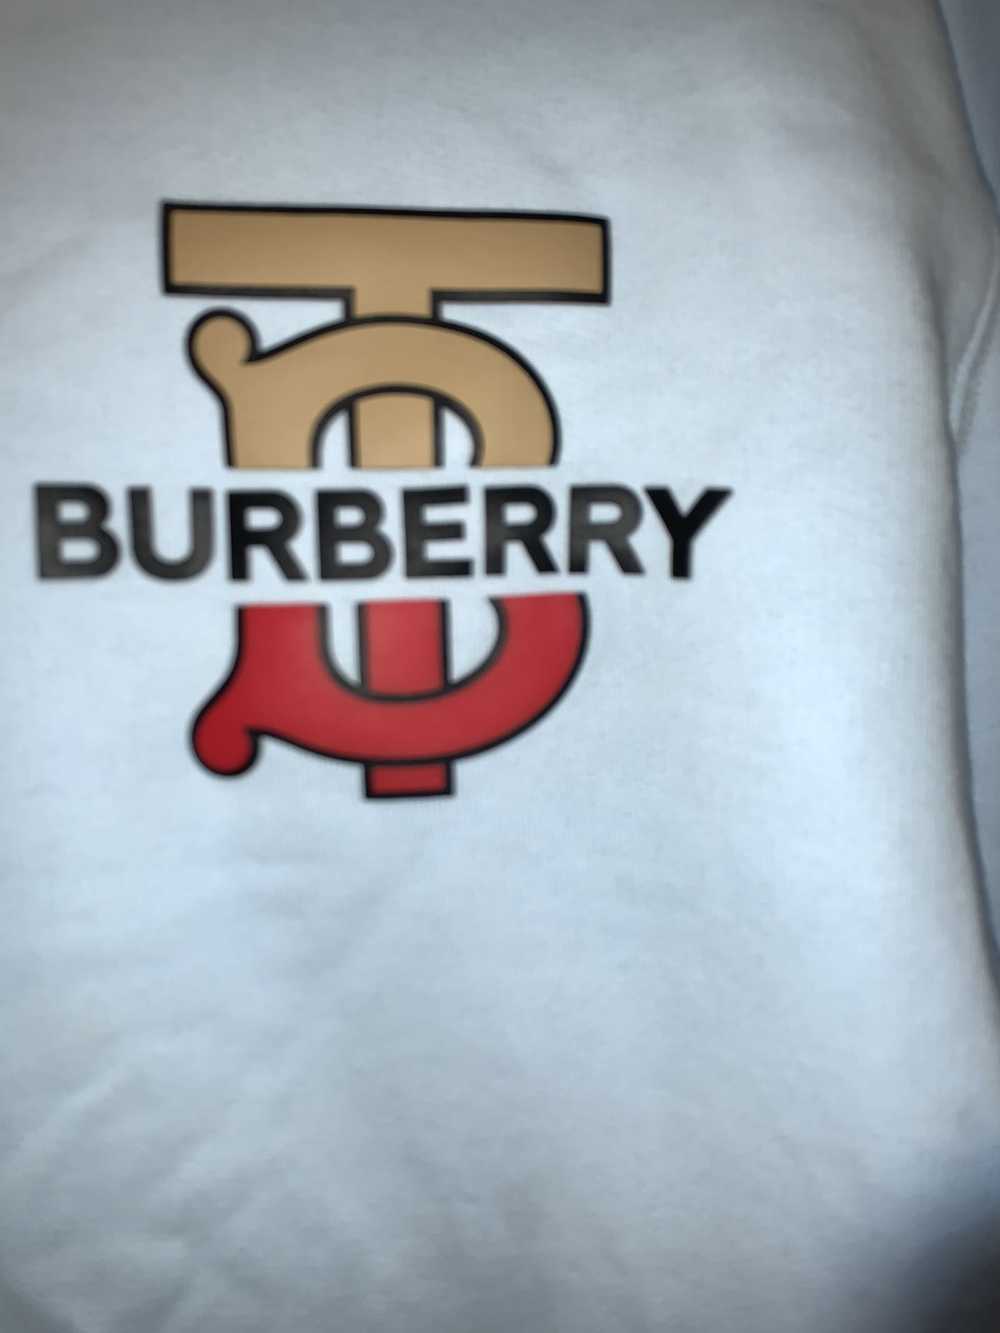 Burberry Burberry sweatshirt - image 2